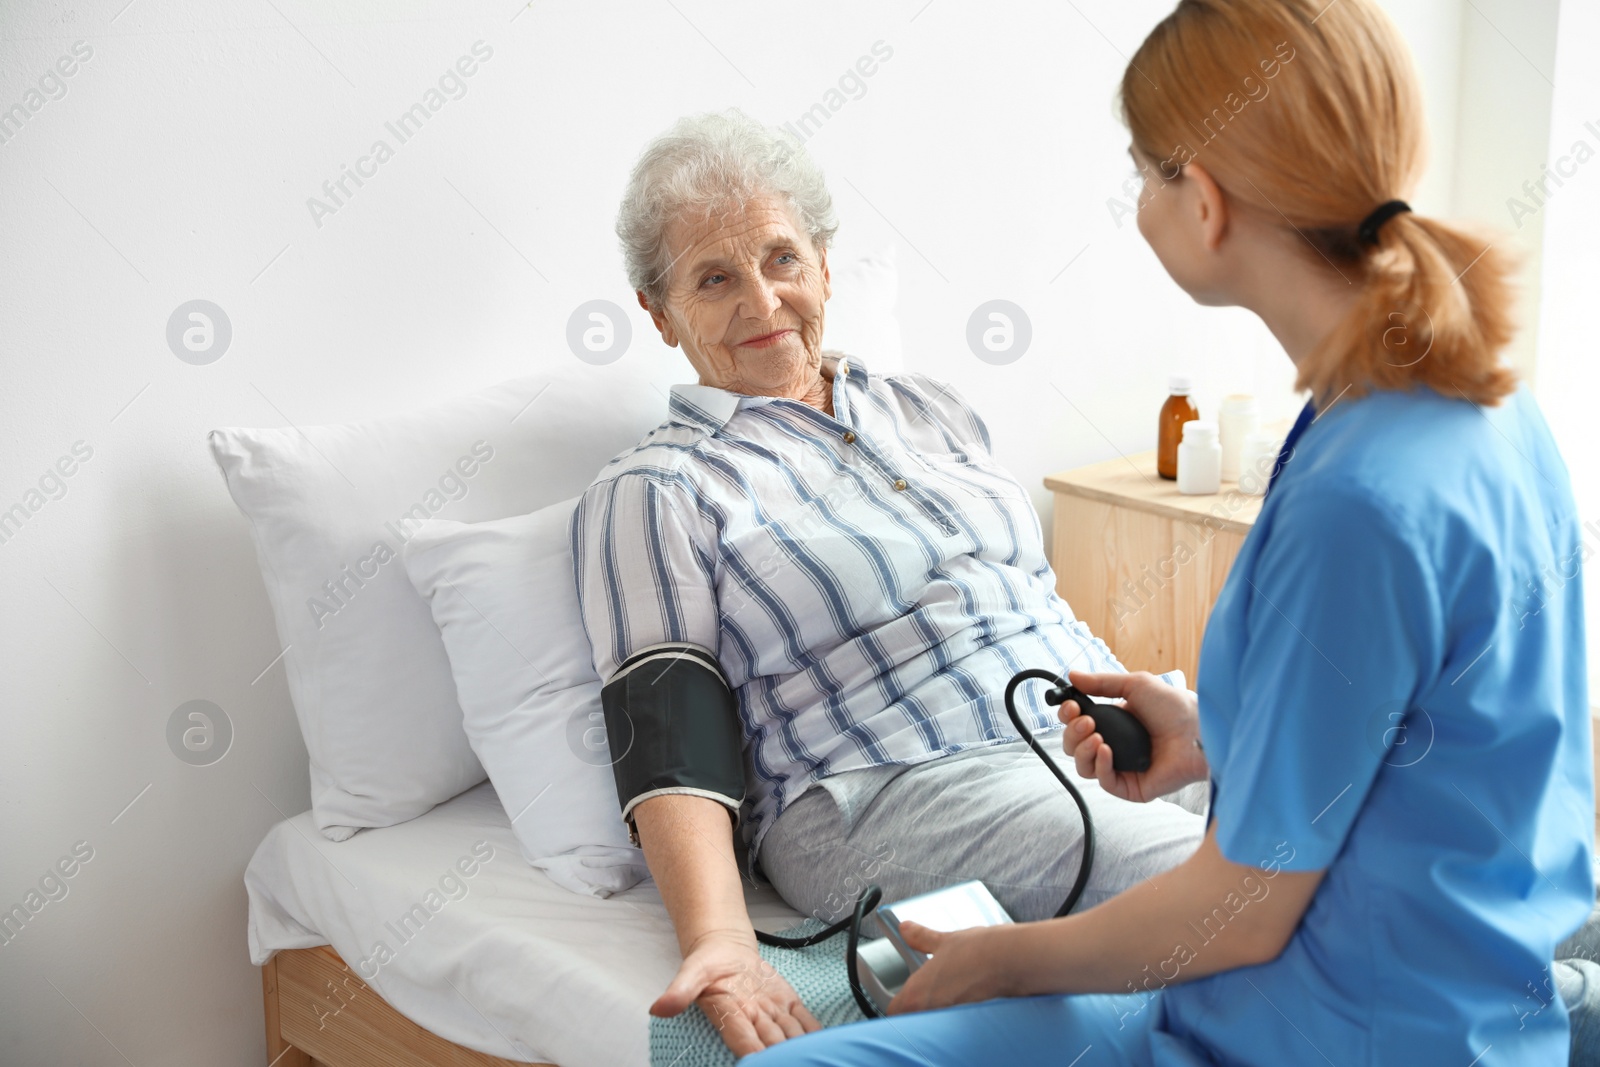 Photo of Nurse measuring blood pressure of elderly woman indoors. Medical assistance